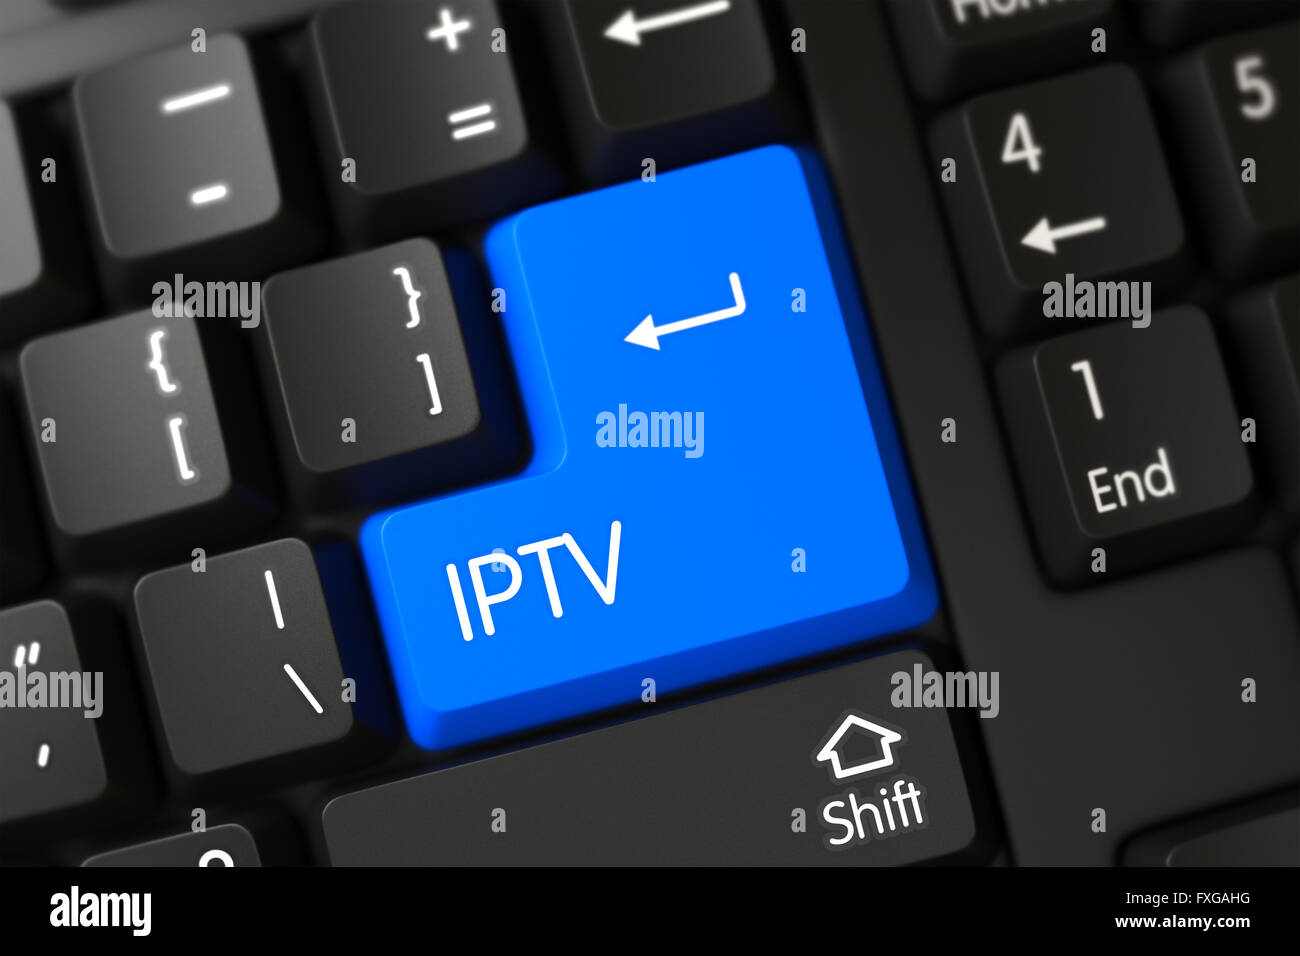 Blue Iptv Keypad on Keyboard. Stock Photo